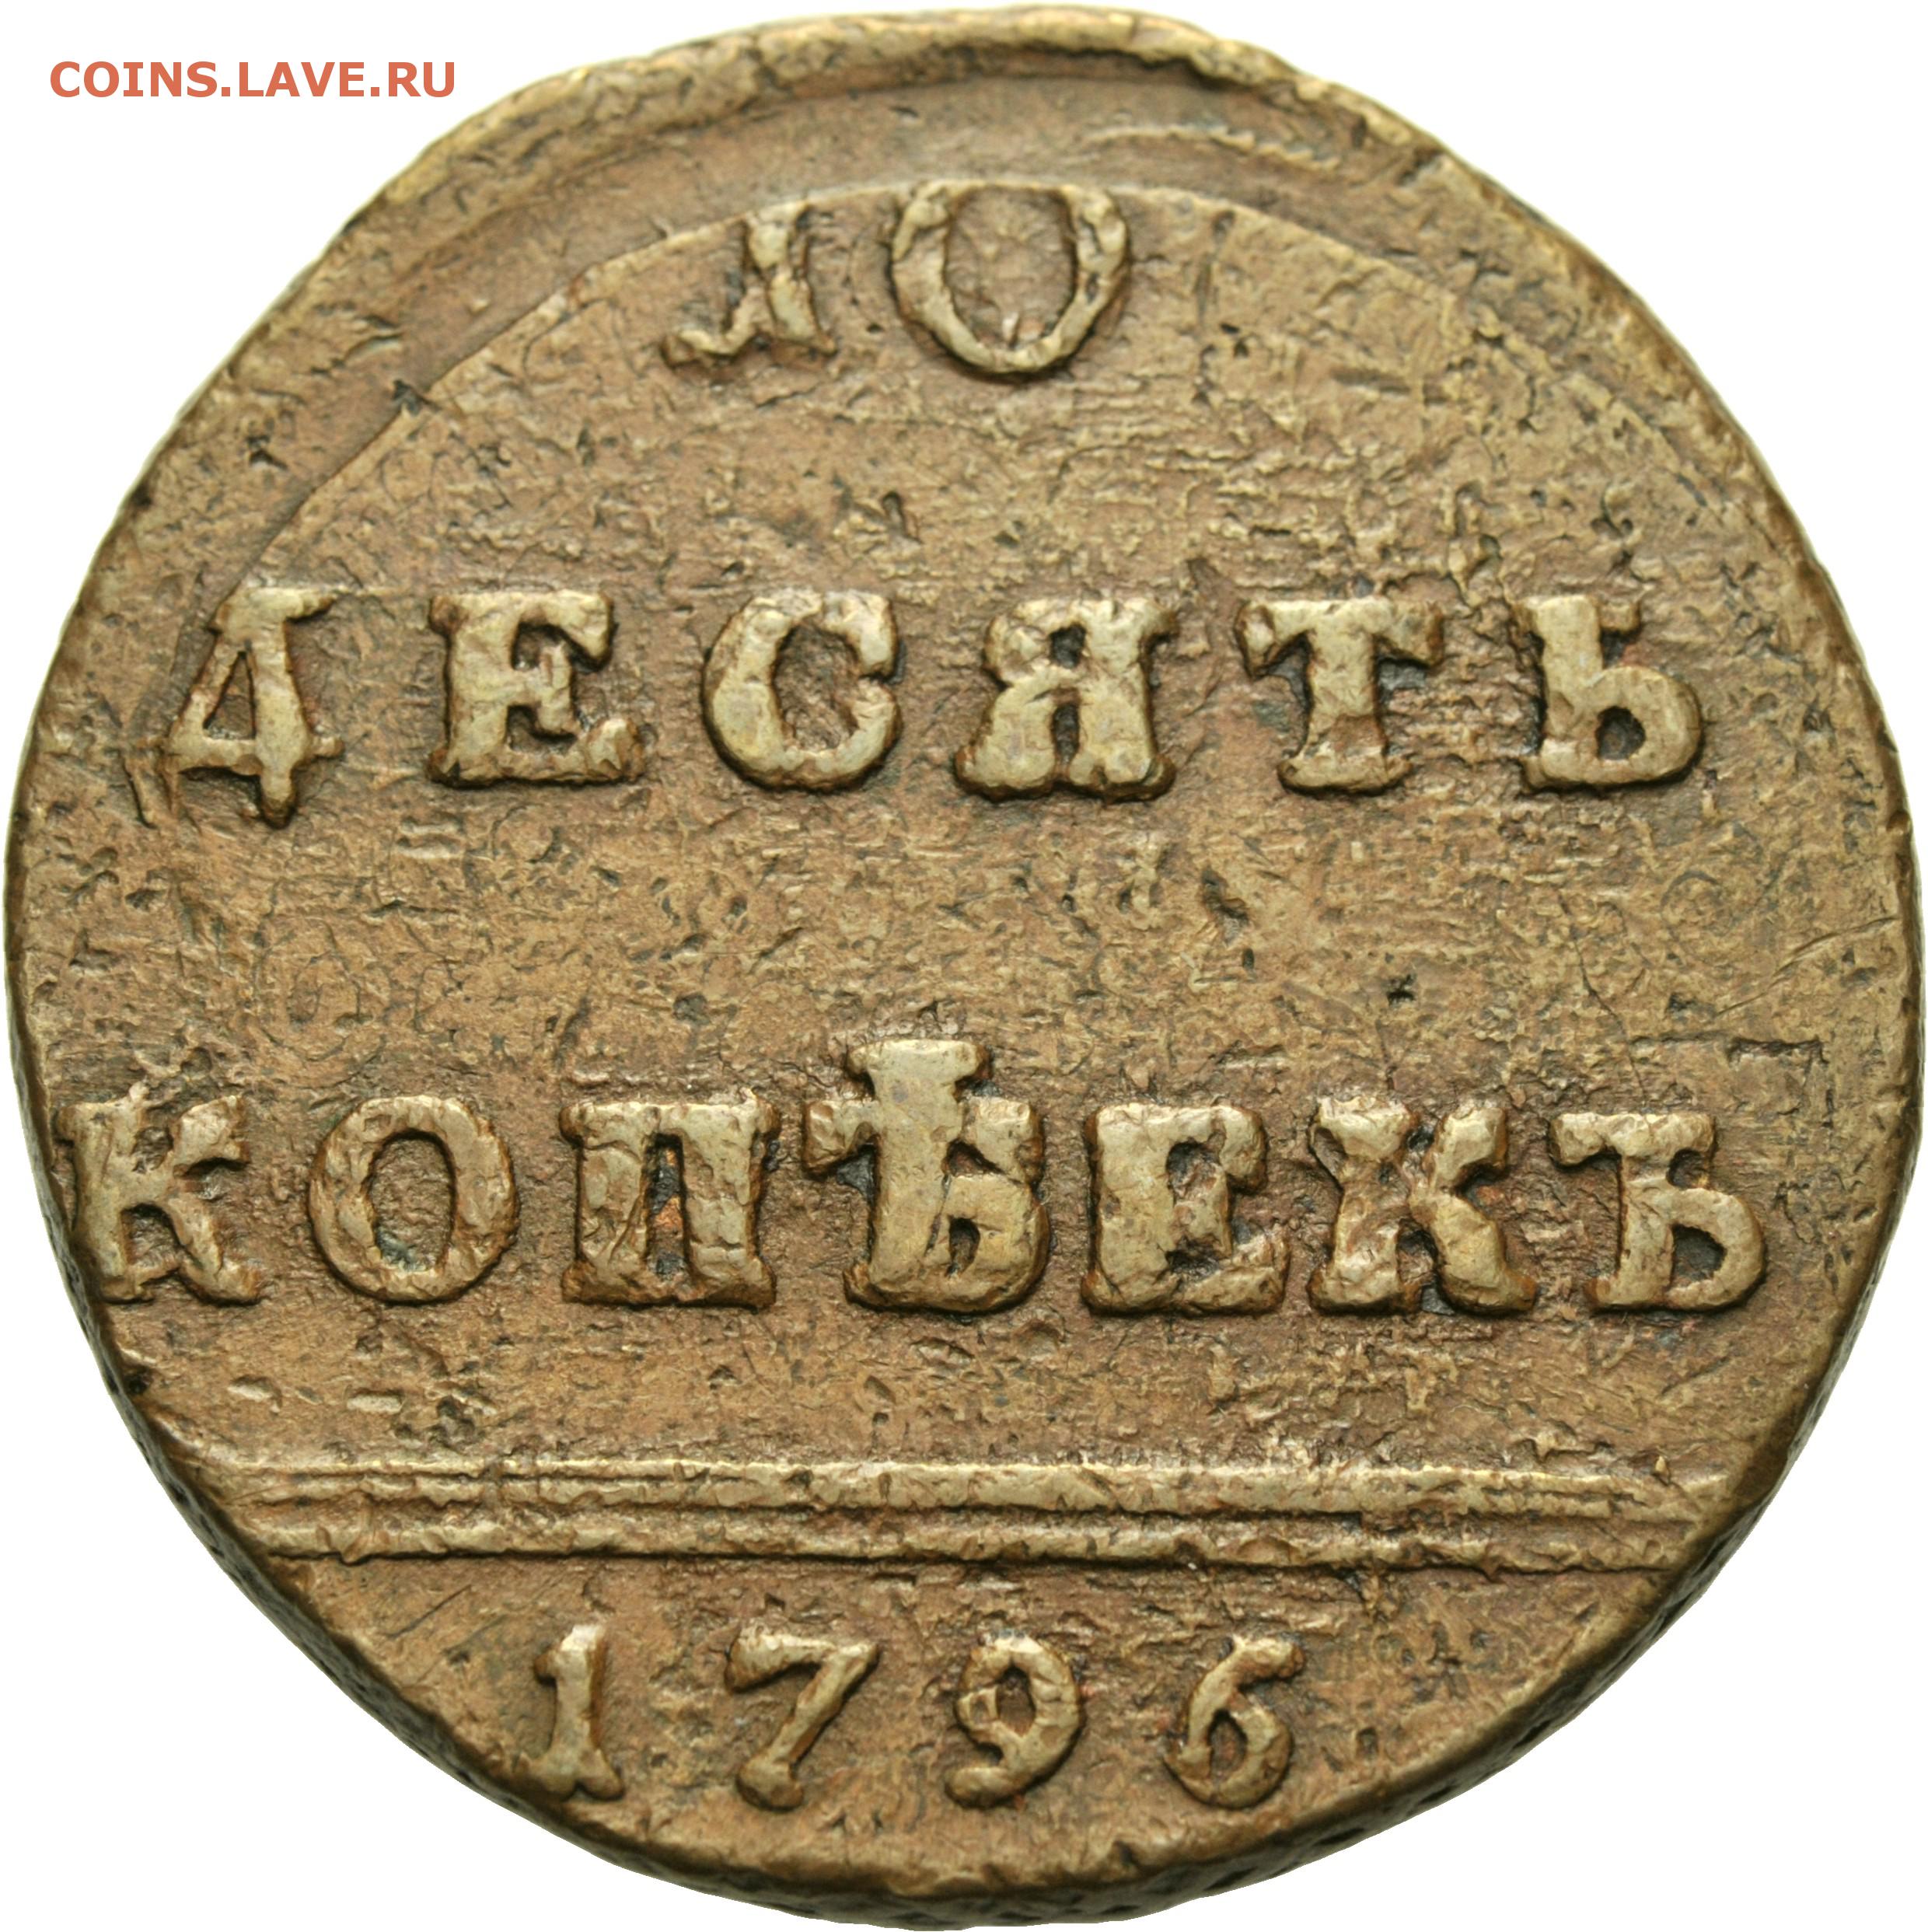 Царский коп. Монеты 1796 года. Старинные монеты 1796. 10 Копеек 1796.